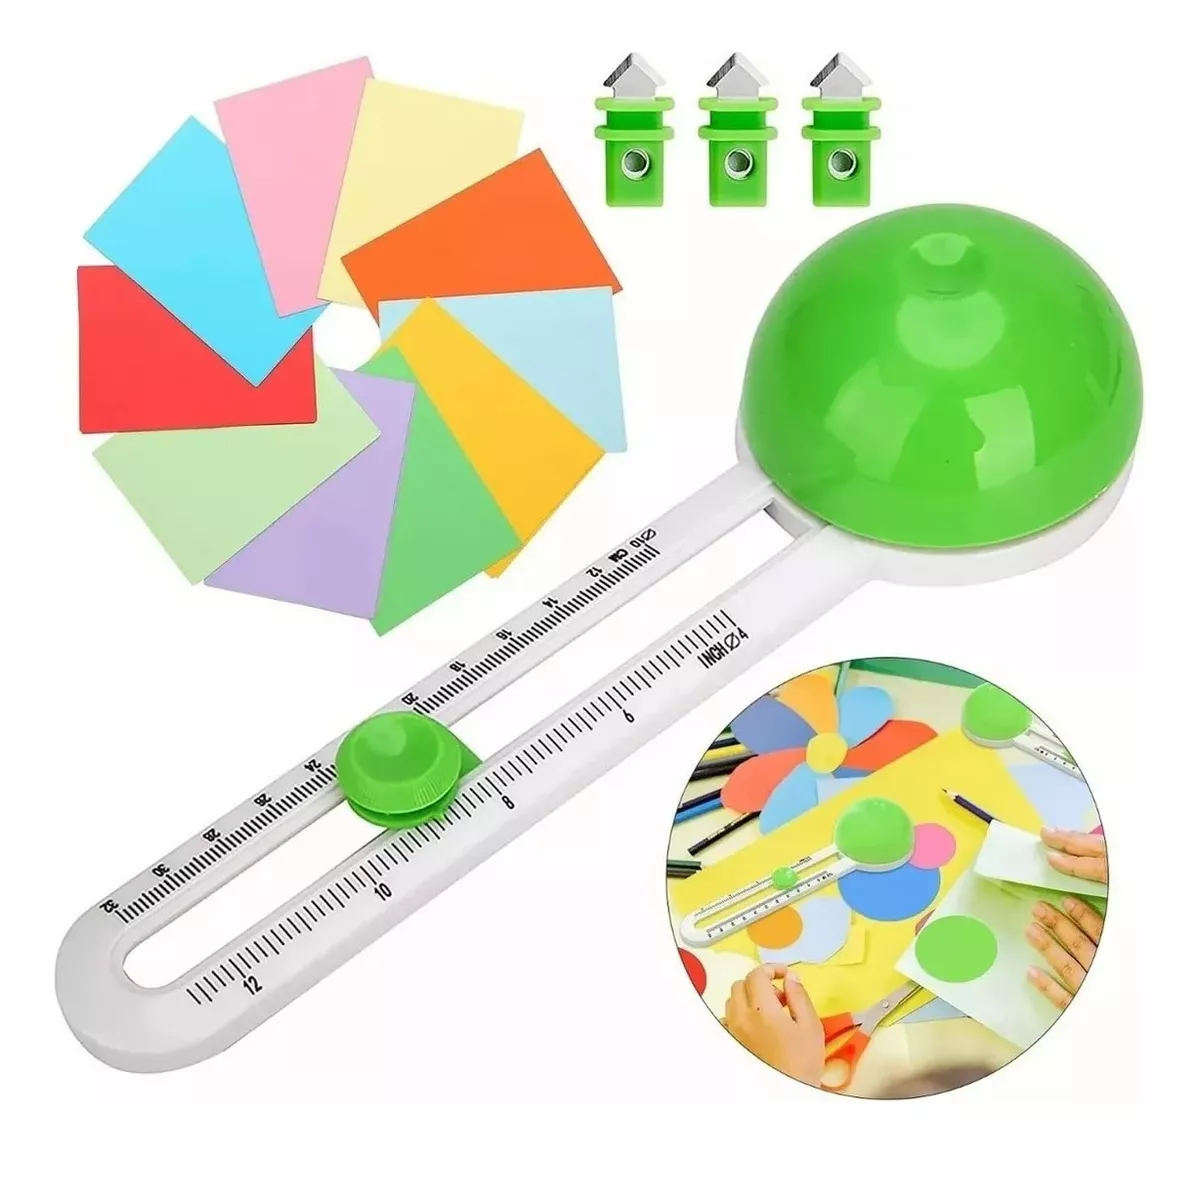  Cortador de papel para álbumes de recortes, cortador circular  para manualidades, cortador giratorio para cartulinas (incluye 3 cuchillas)  (verde) : Productos de Oficina